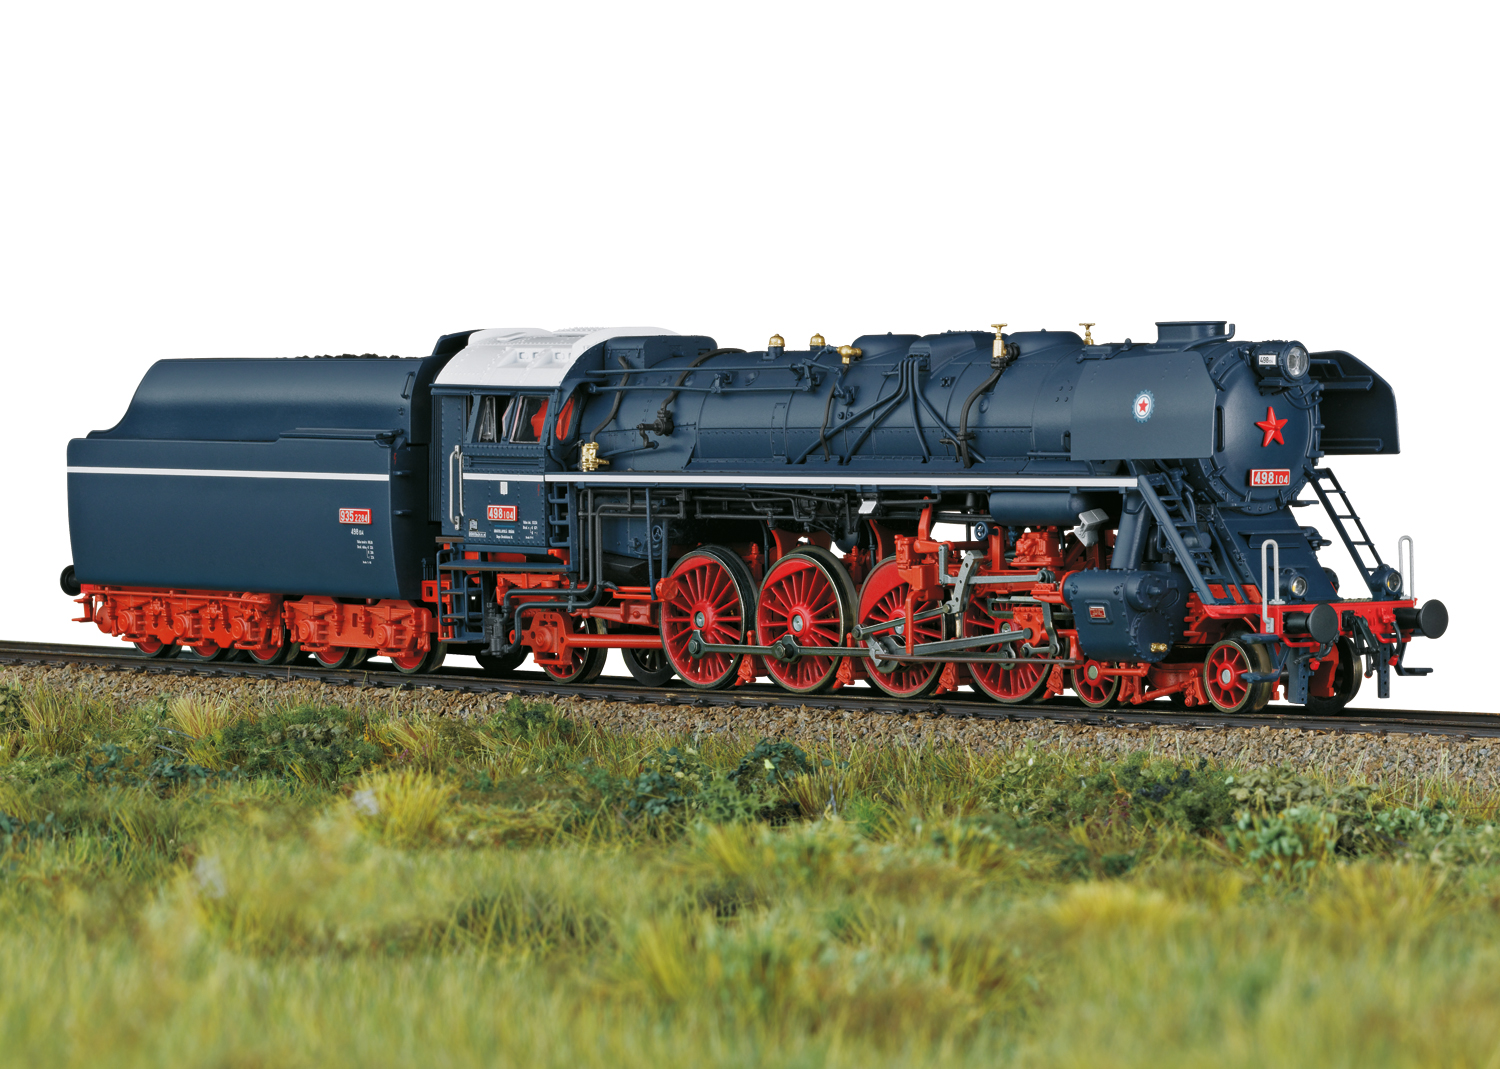 Trix 25498 Dampflokomotive Baureihe 498.1 Albatros